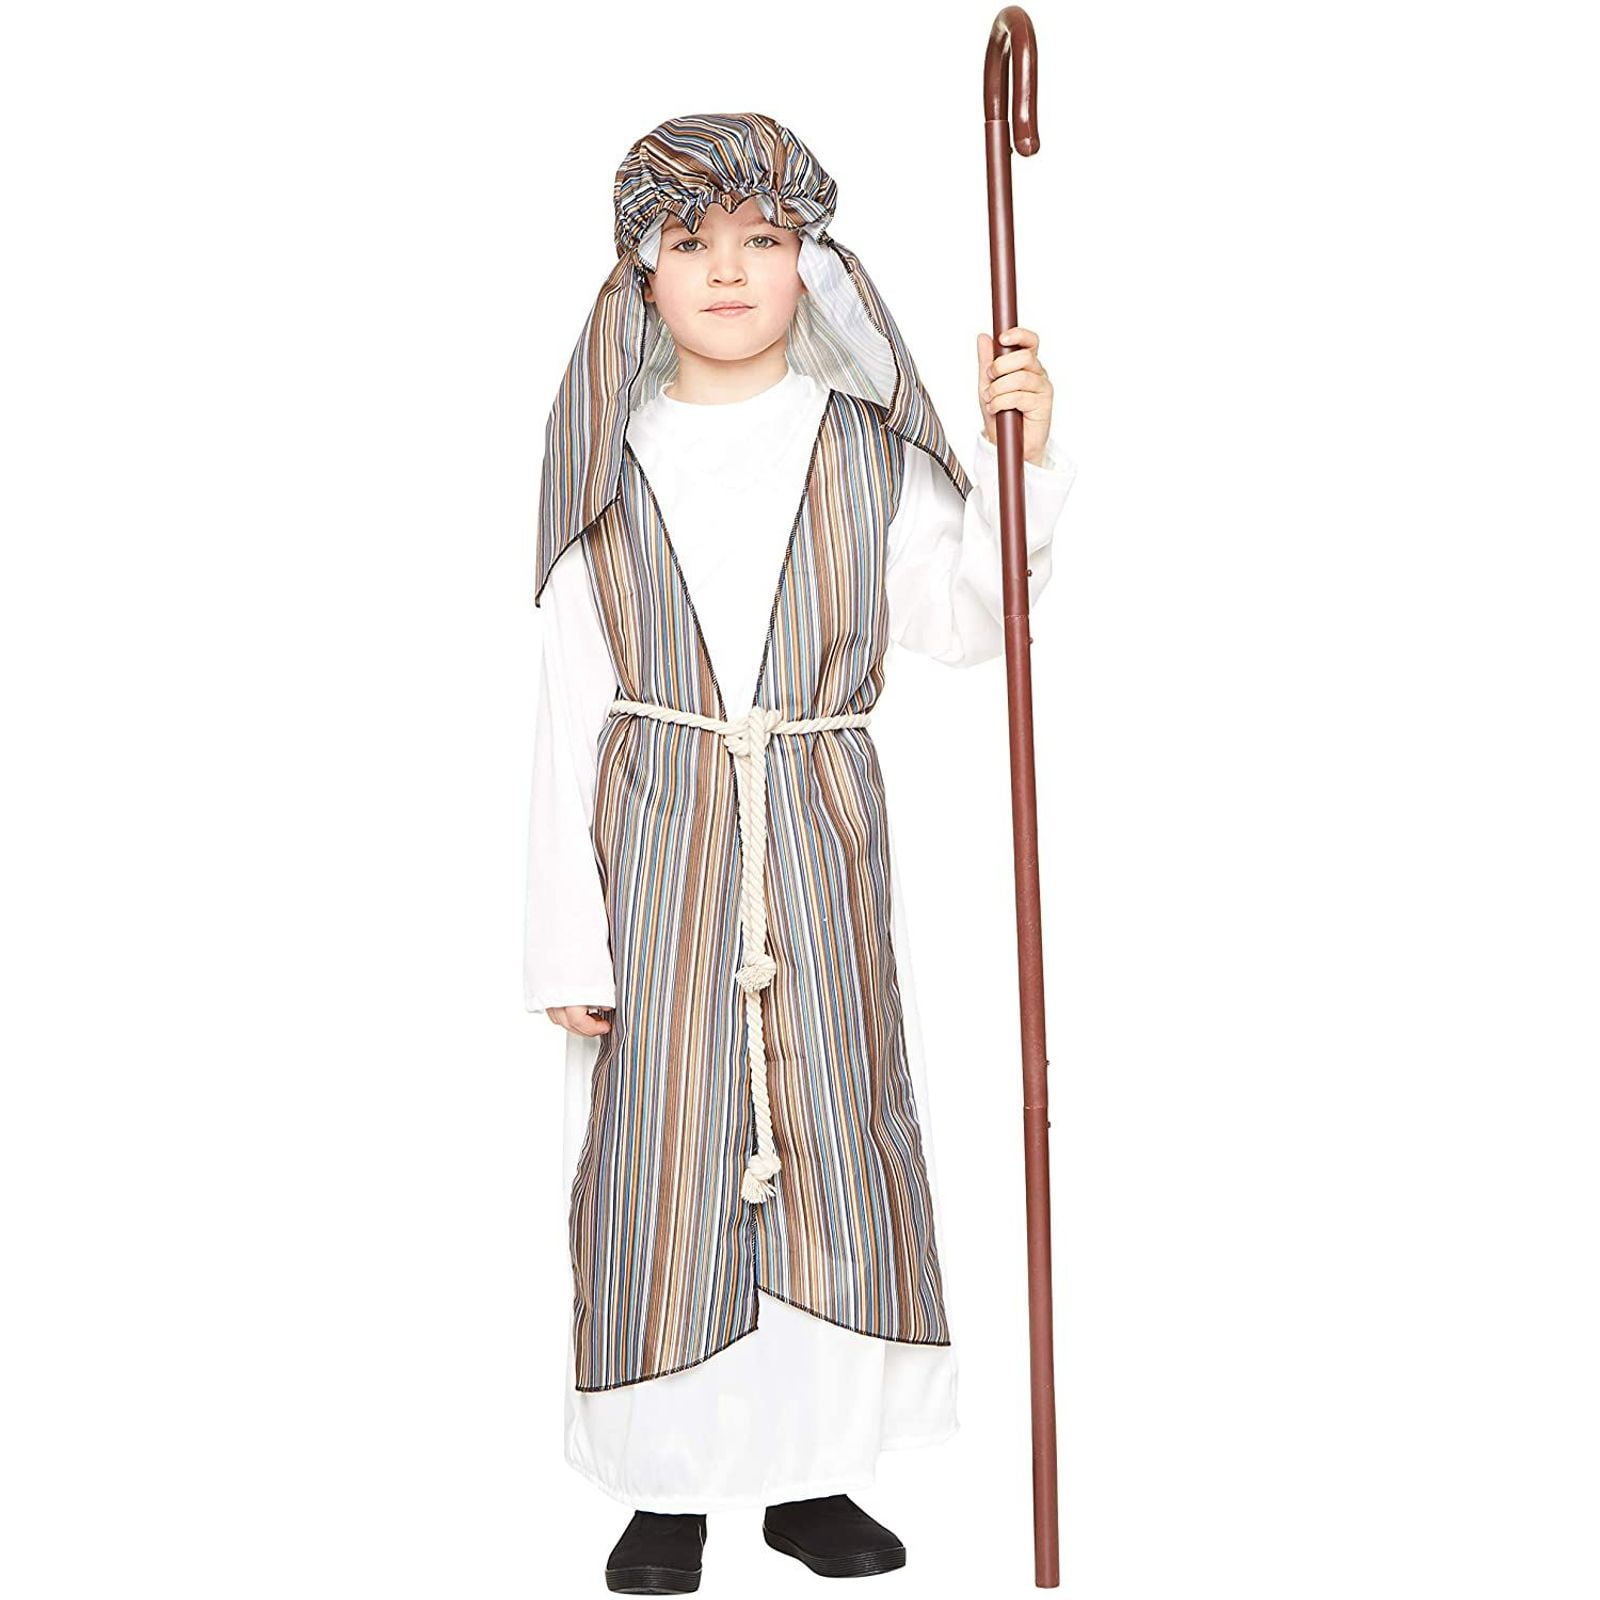 Hook Cane Christmas Costume Outfit Nativity Fancy Dress Up Shepherds Crook 